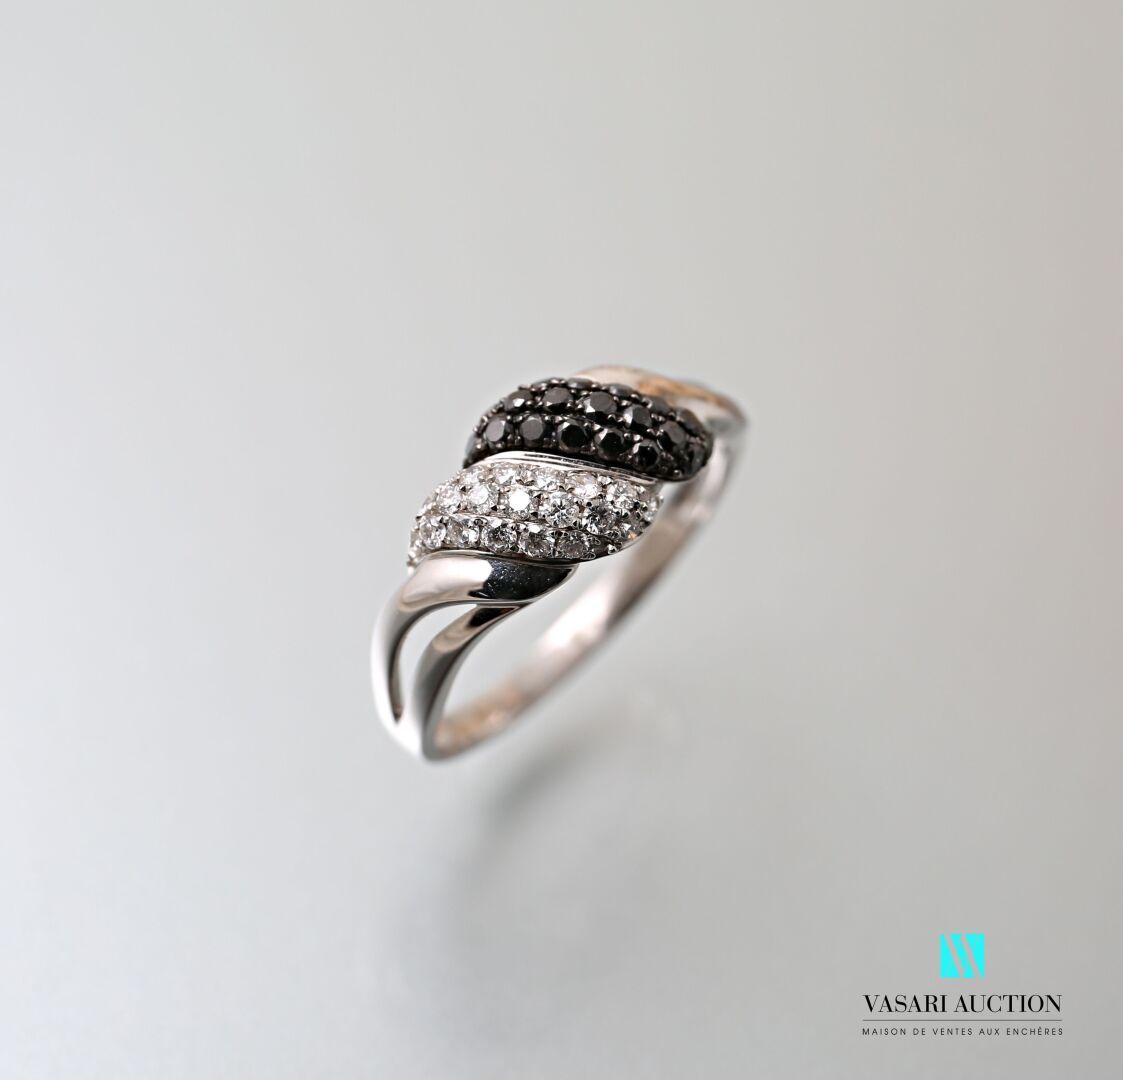 Null 750千分之一的白金戒指，装饰有两根镶有黑色和白色钻石的捻子。

毛重：2.75克 - 手指尺寸：56